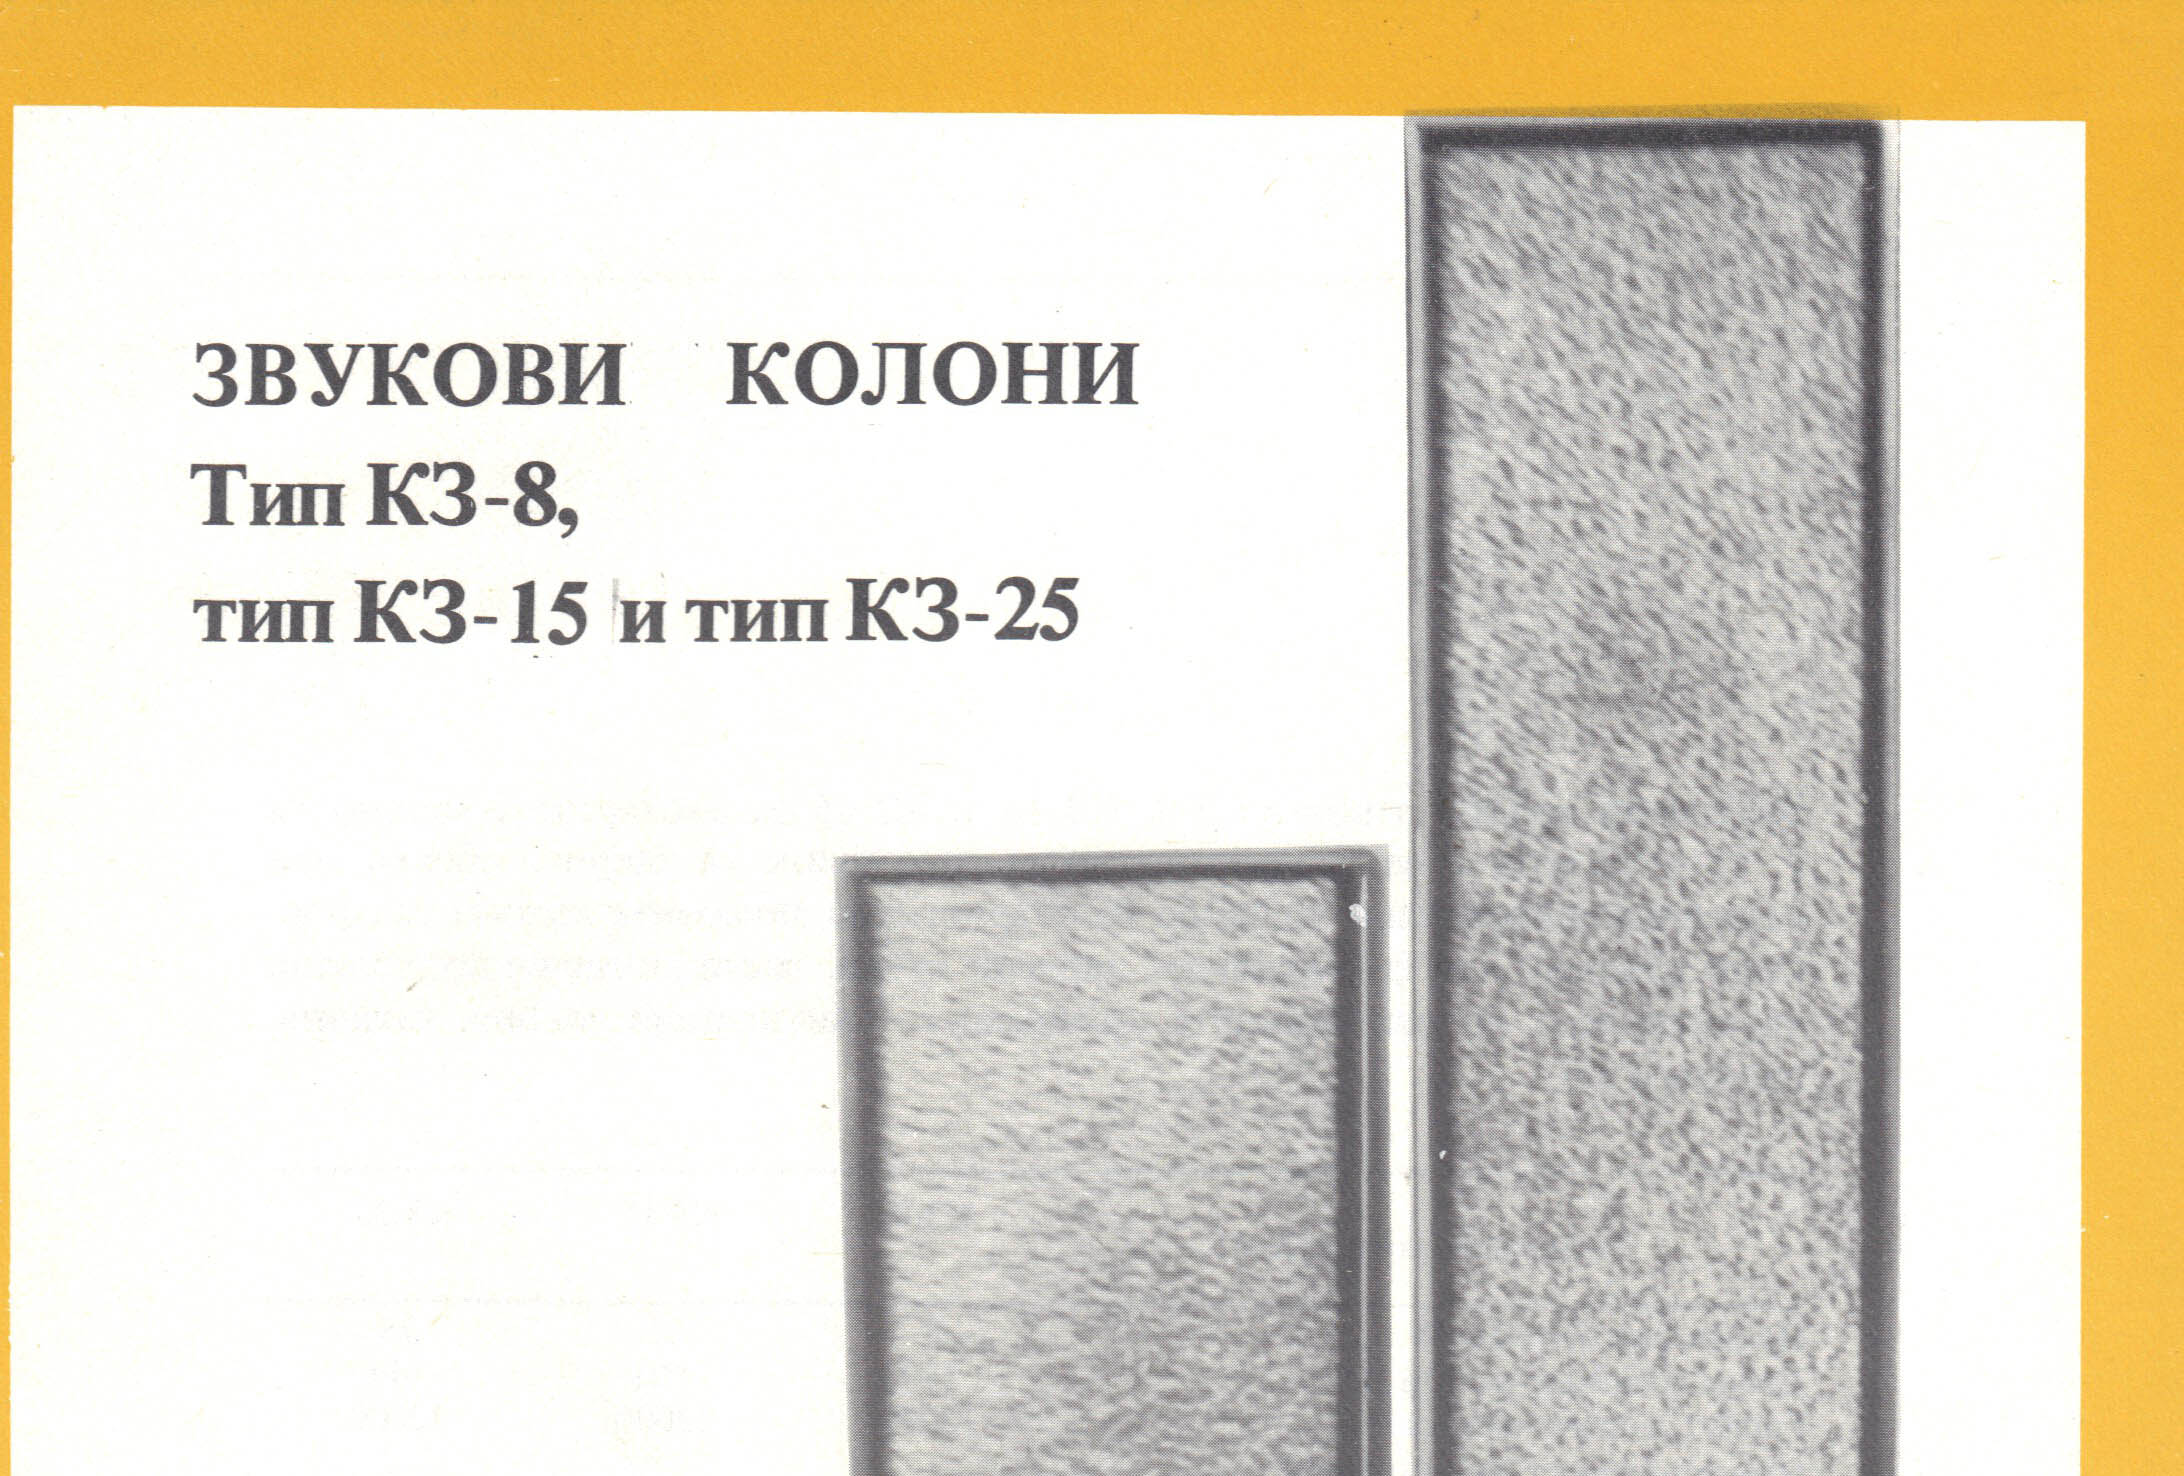 Български звукови колони КЗ-8, КЗ-15 и КЗ-25